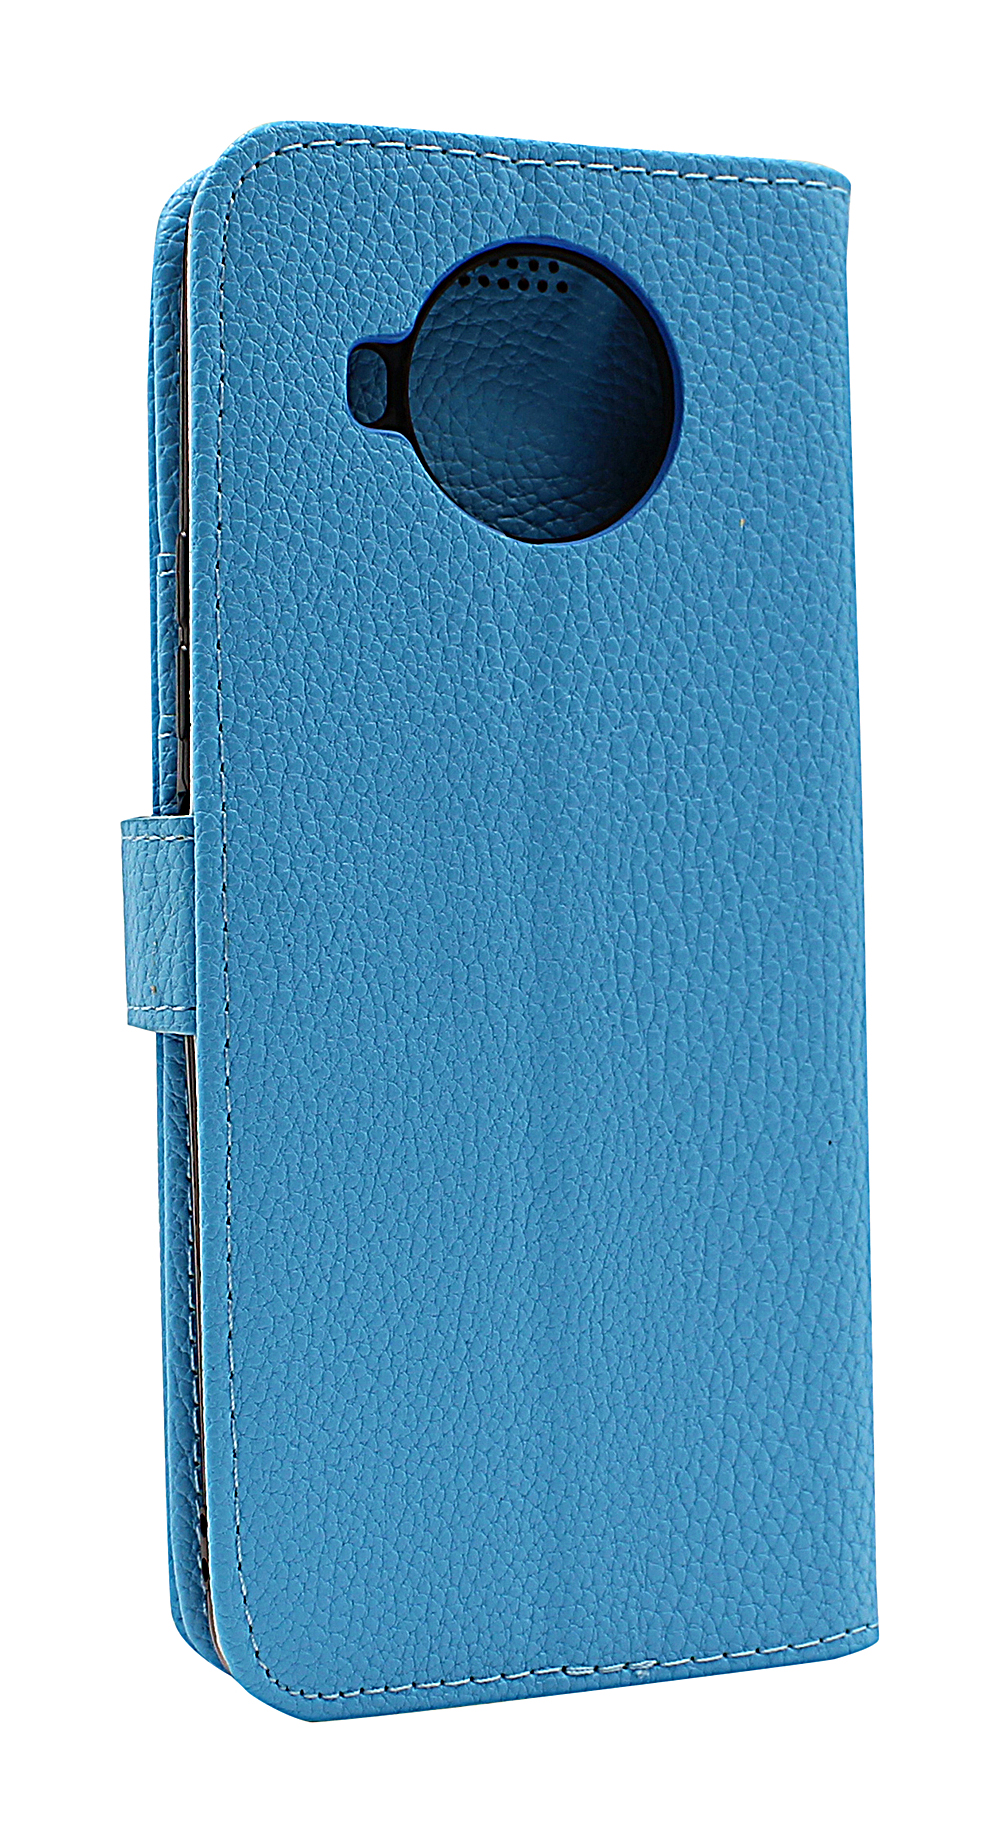 New Standcase Wallet Nokia 8.3